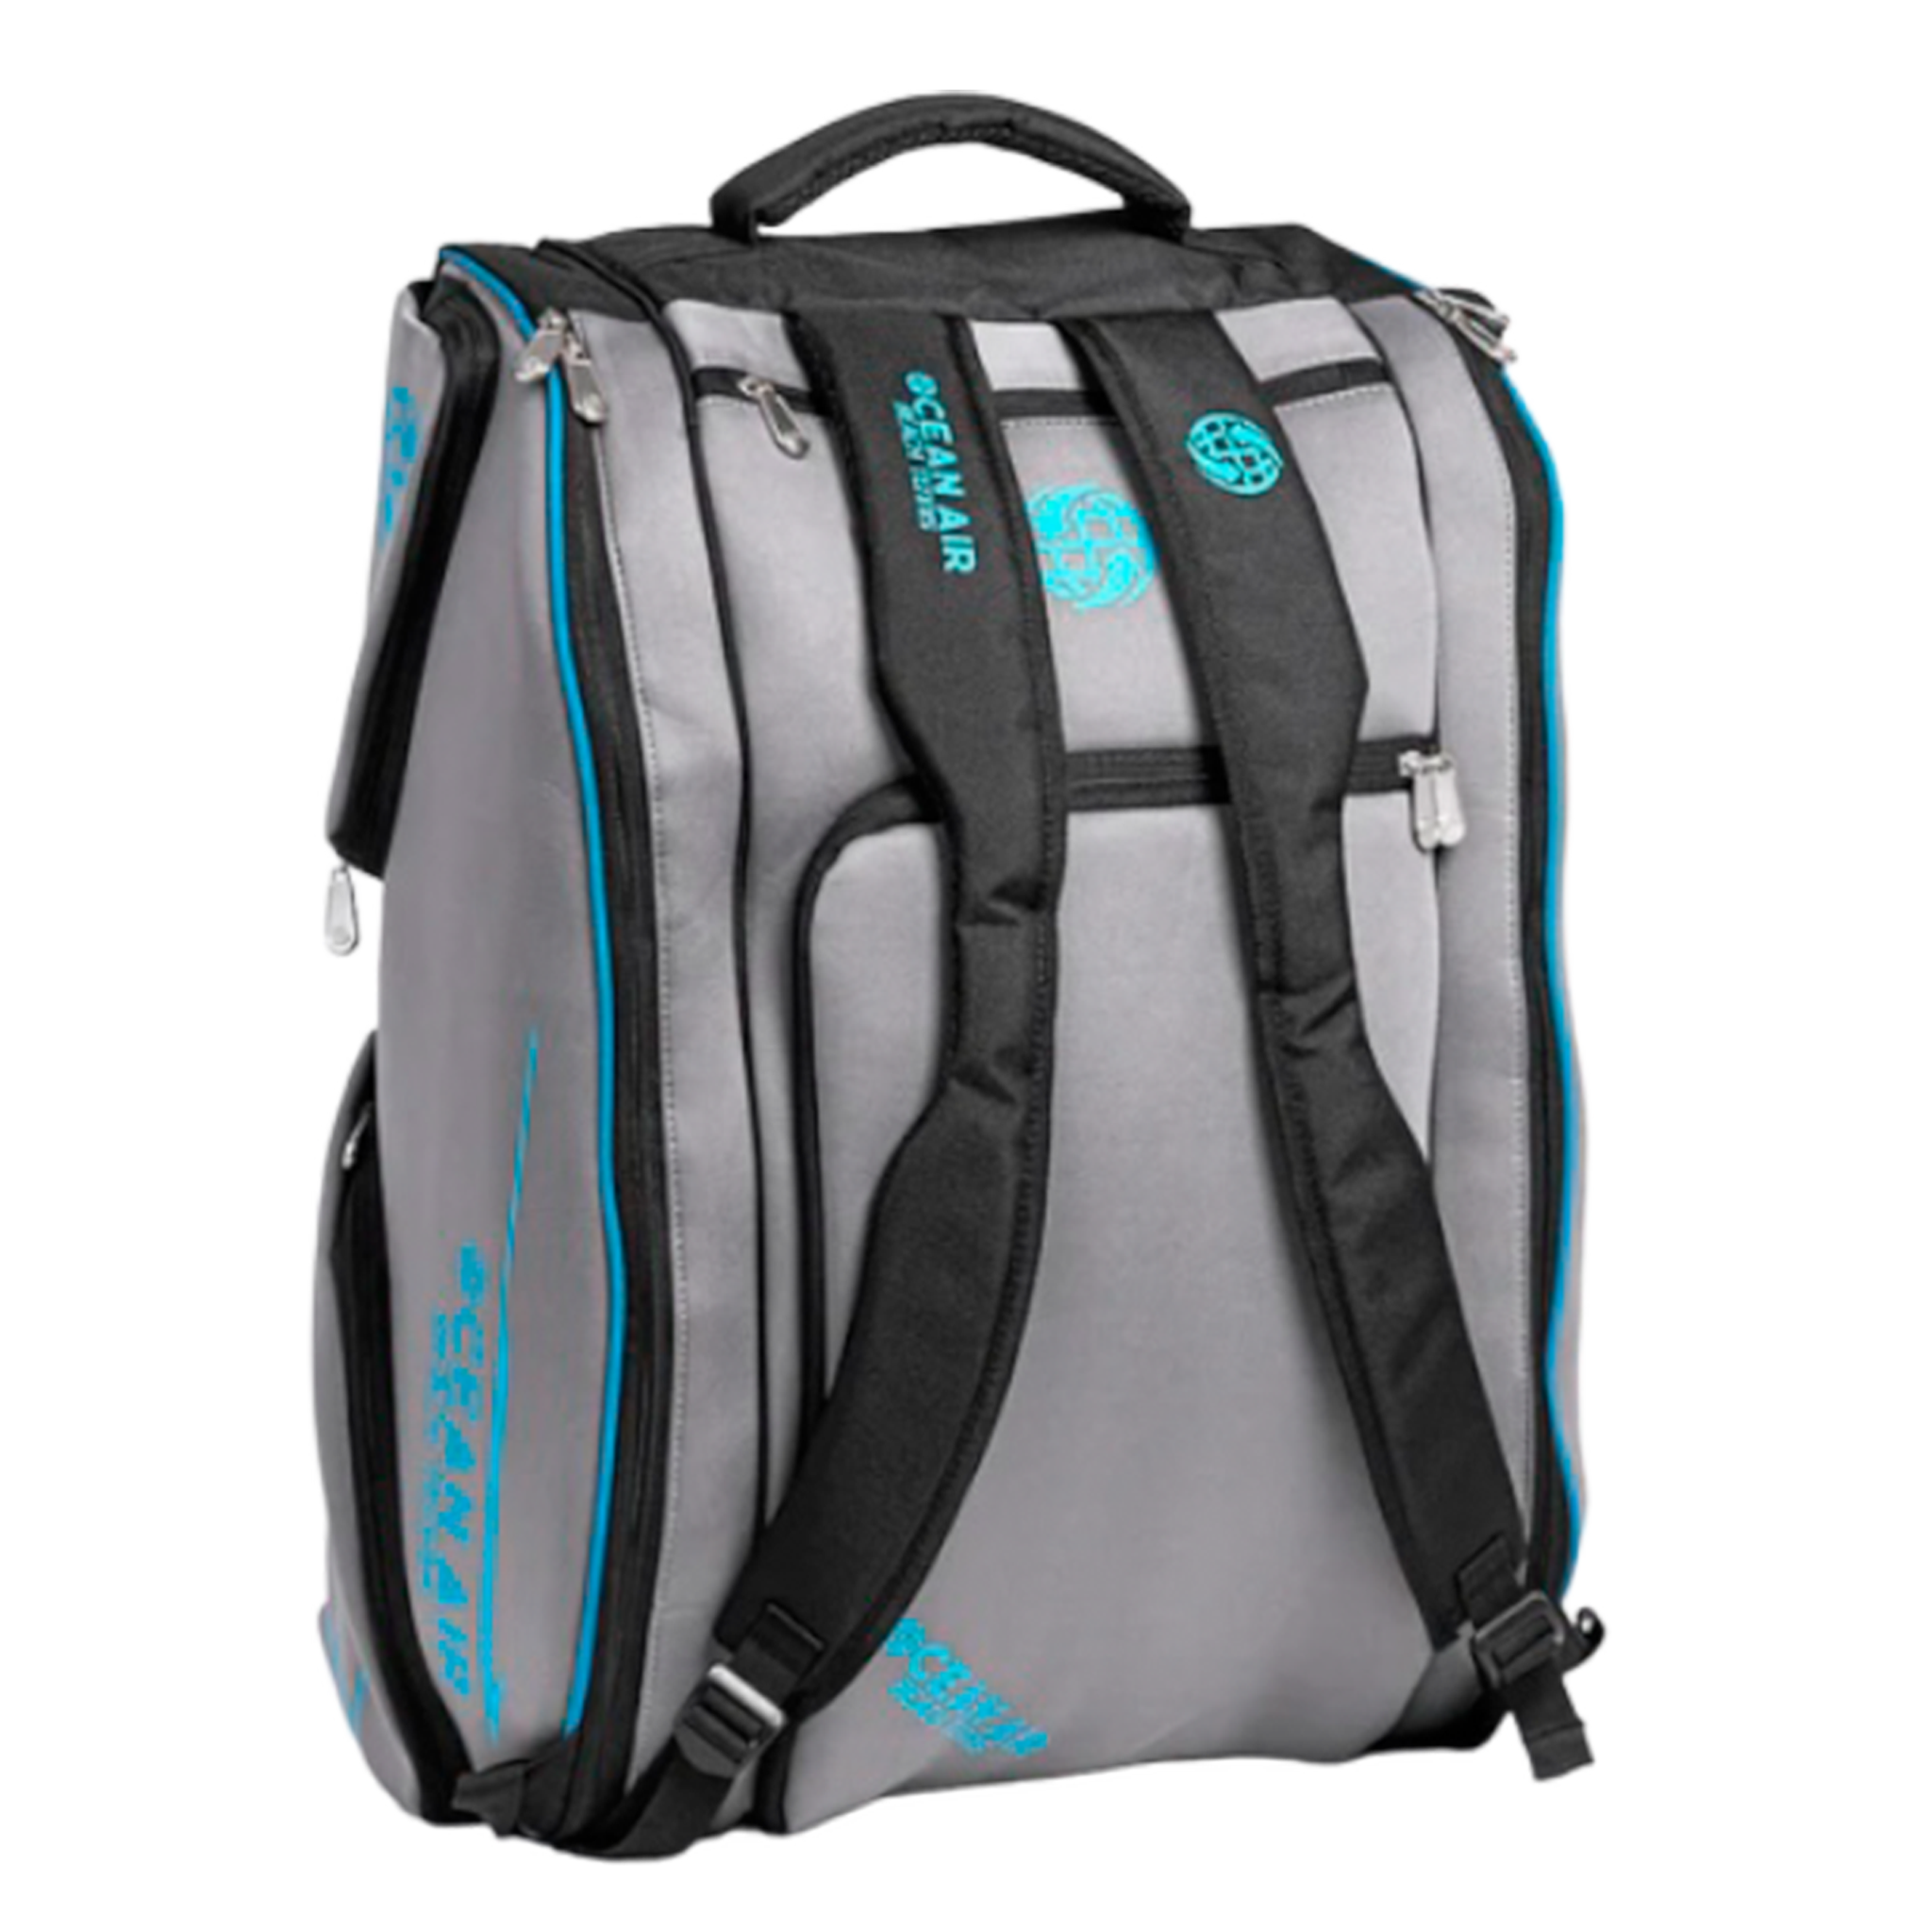 Ocean Air Pro BT Travel Bag Gray/Blue